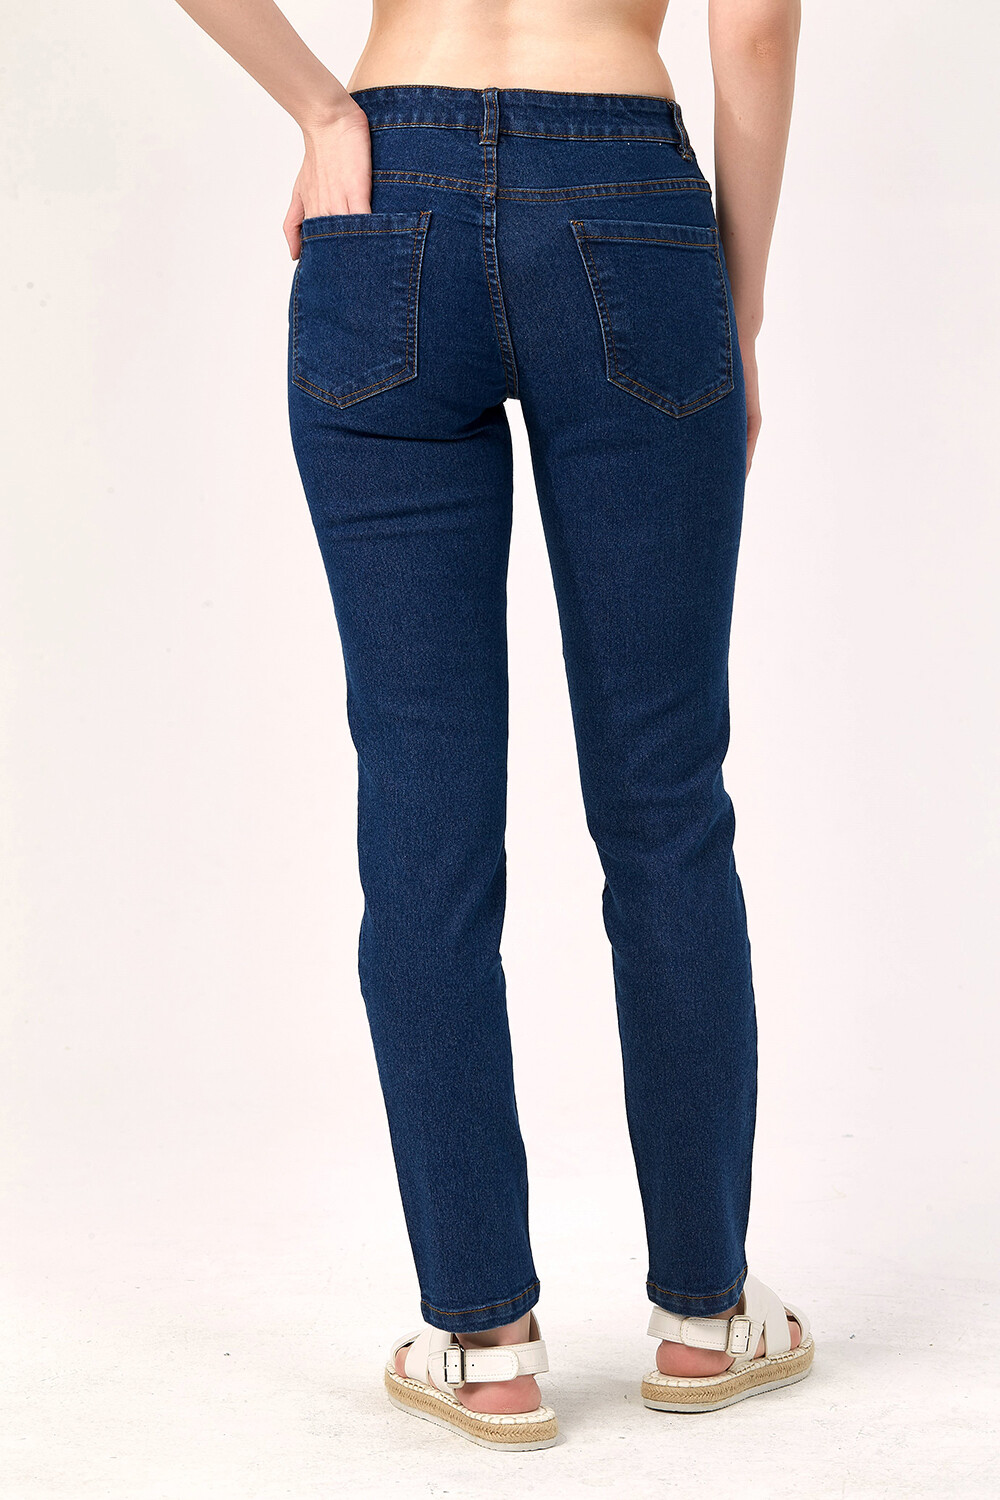 Pantalon Javari Azul Medio